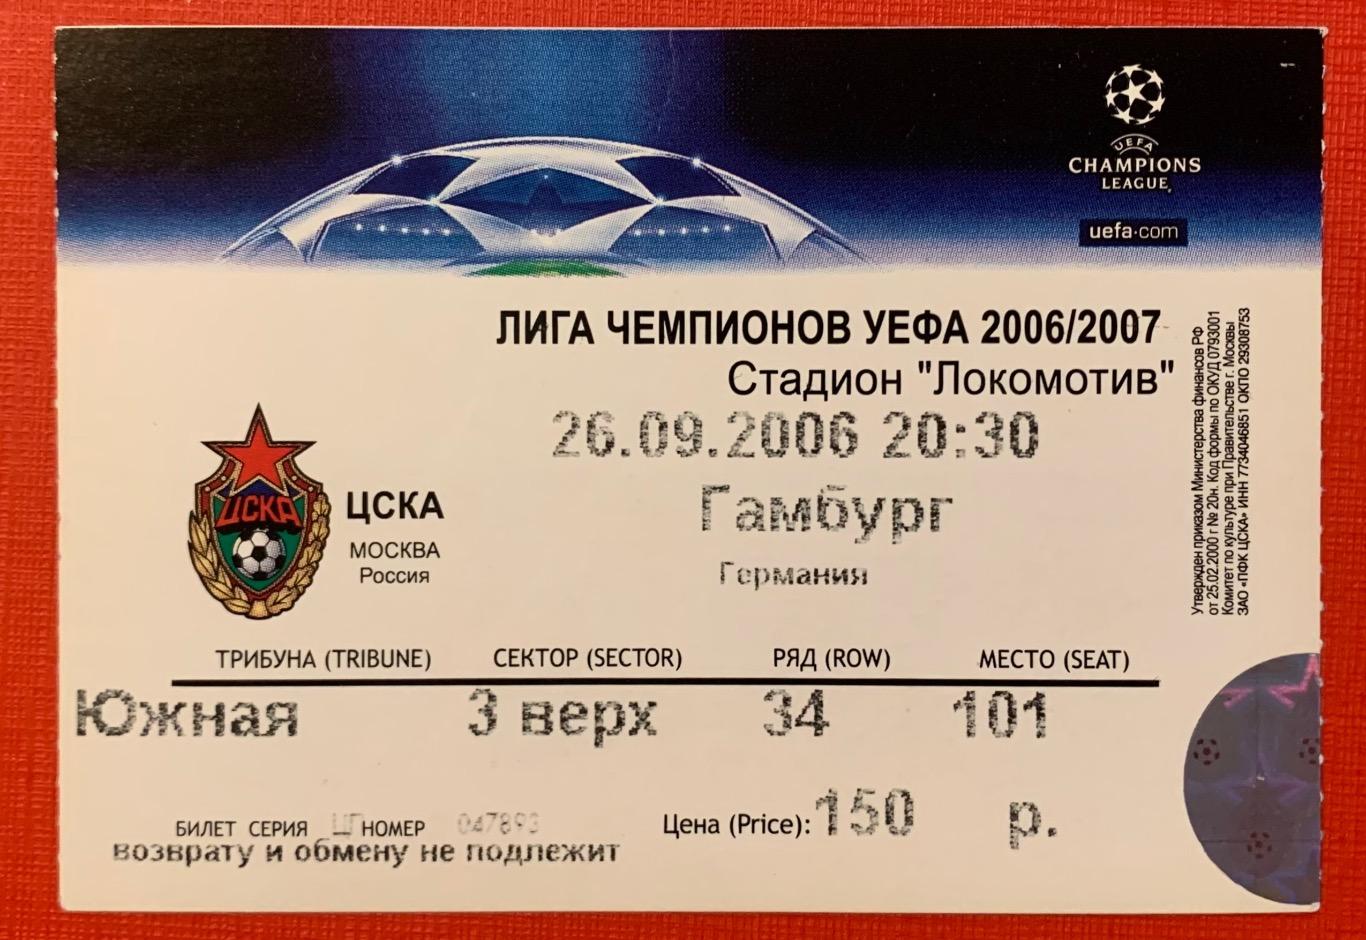 Билет ЦСКА Москва - Гамбург 26.09.2006